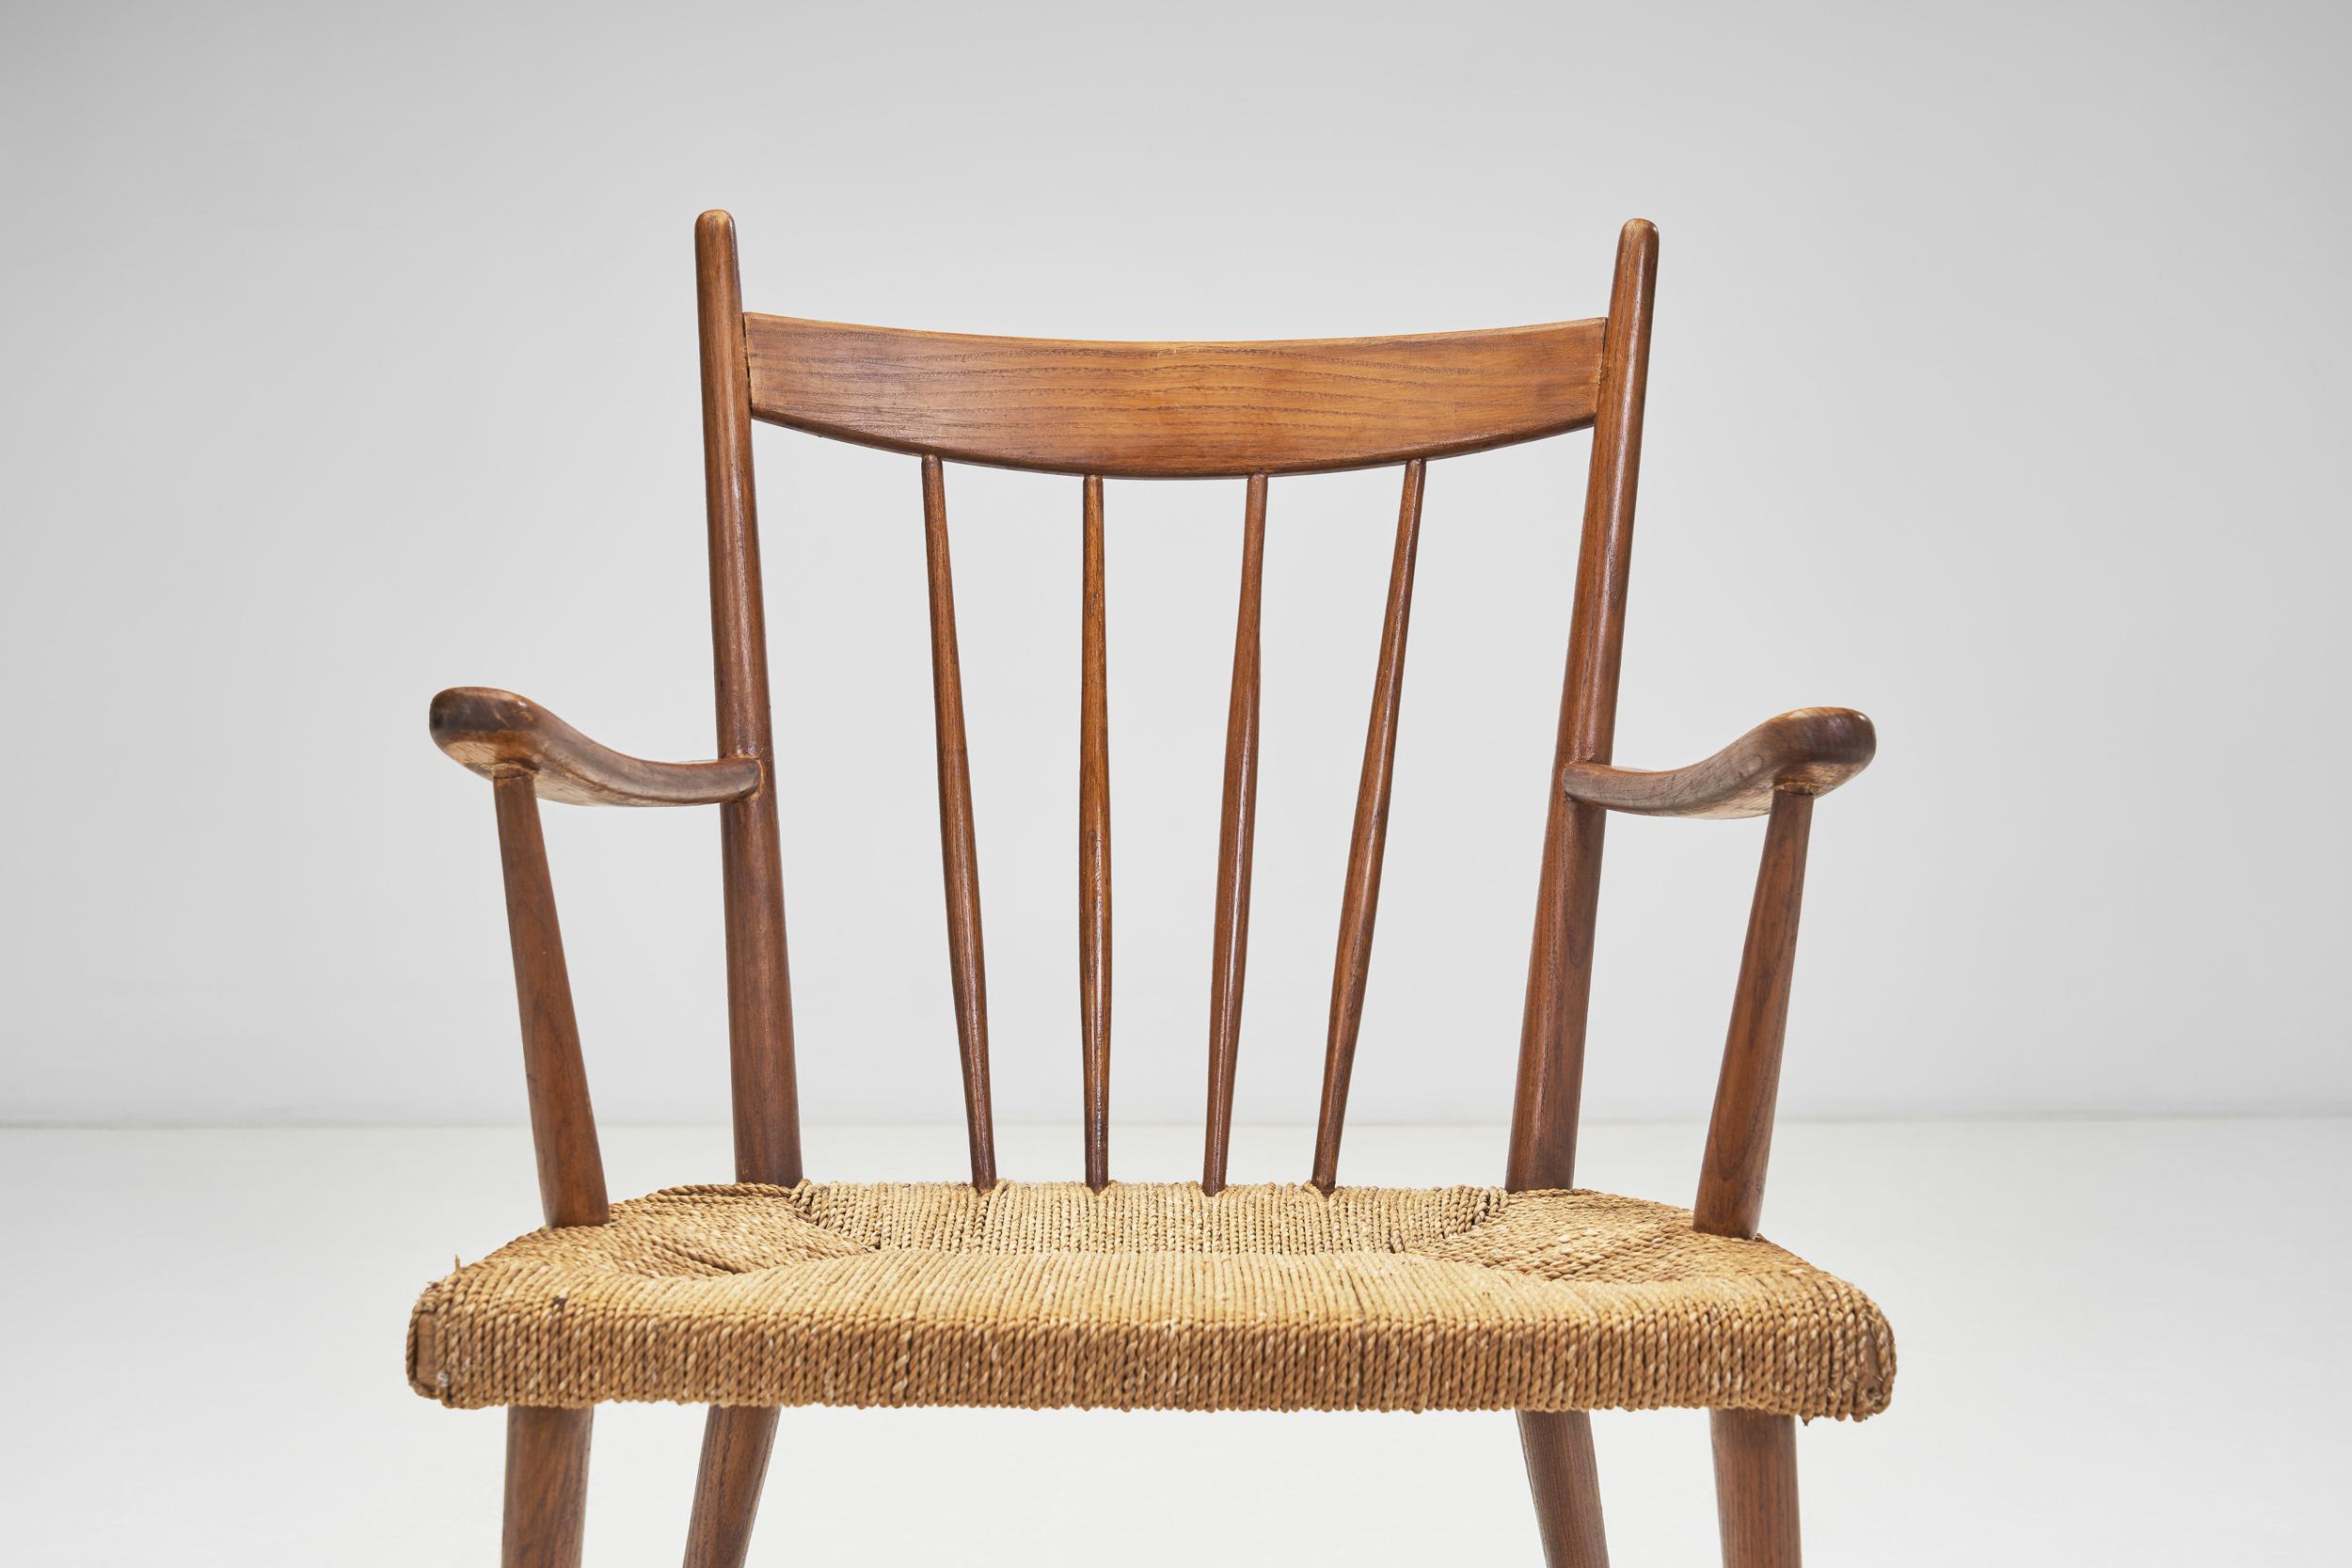 Teak Slatback Chairs with Woven Danish Cord Seats, Denmark ca 1960s For Sale 4